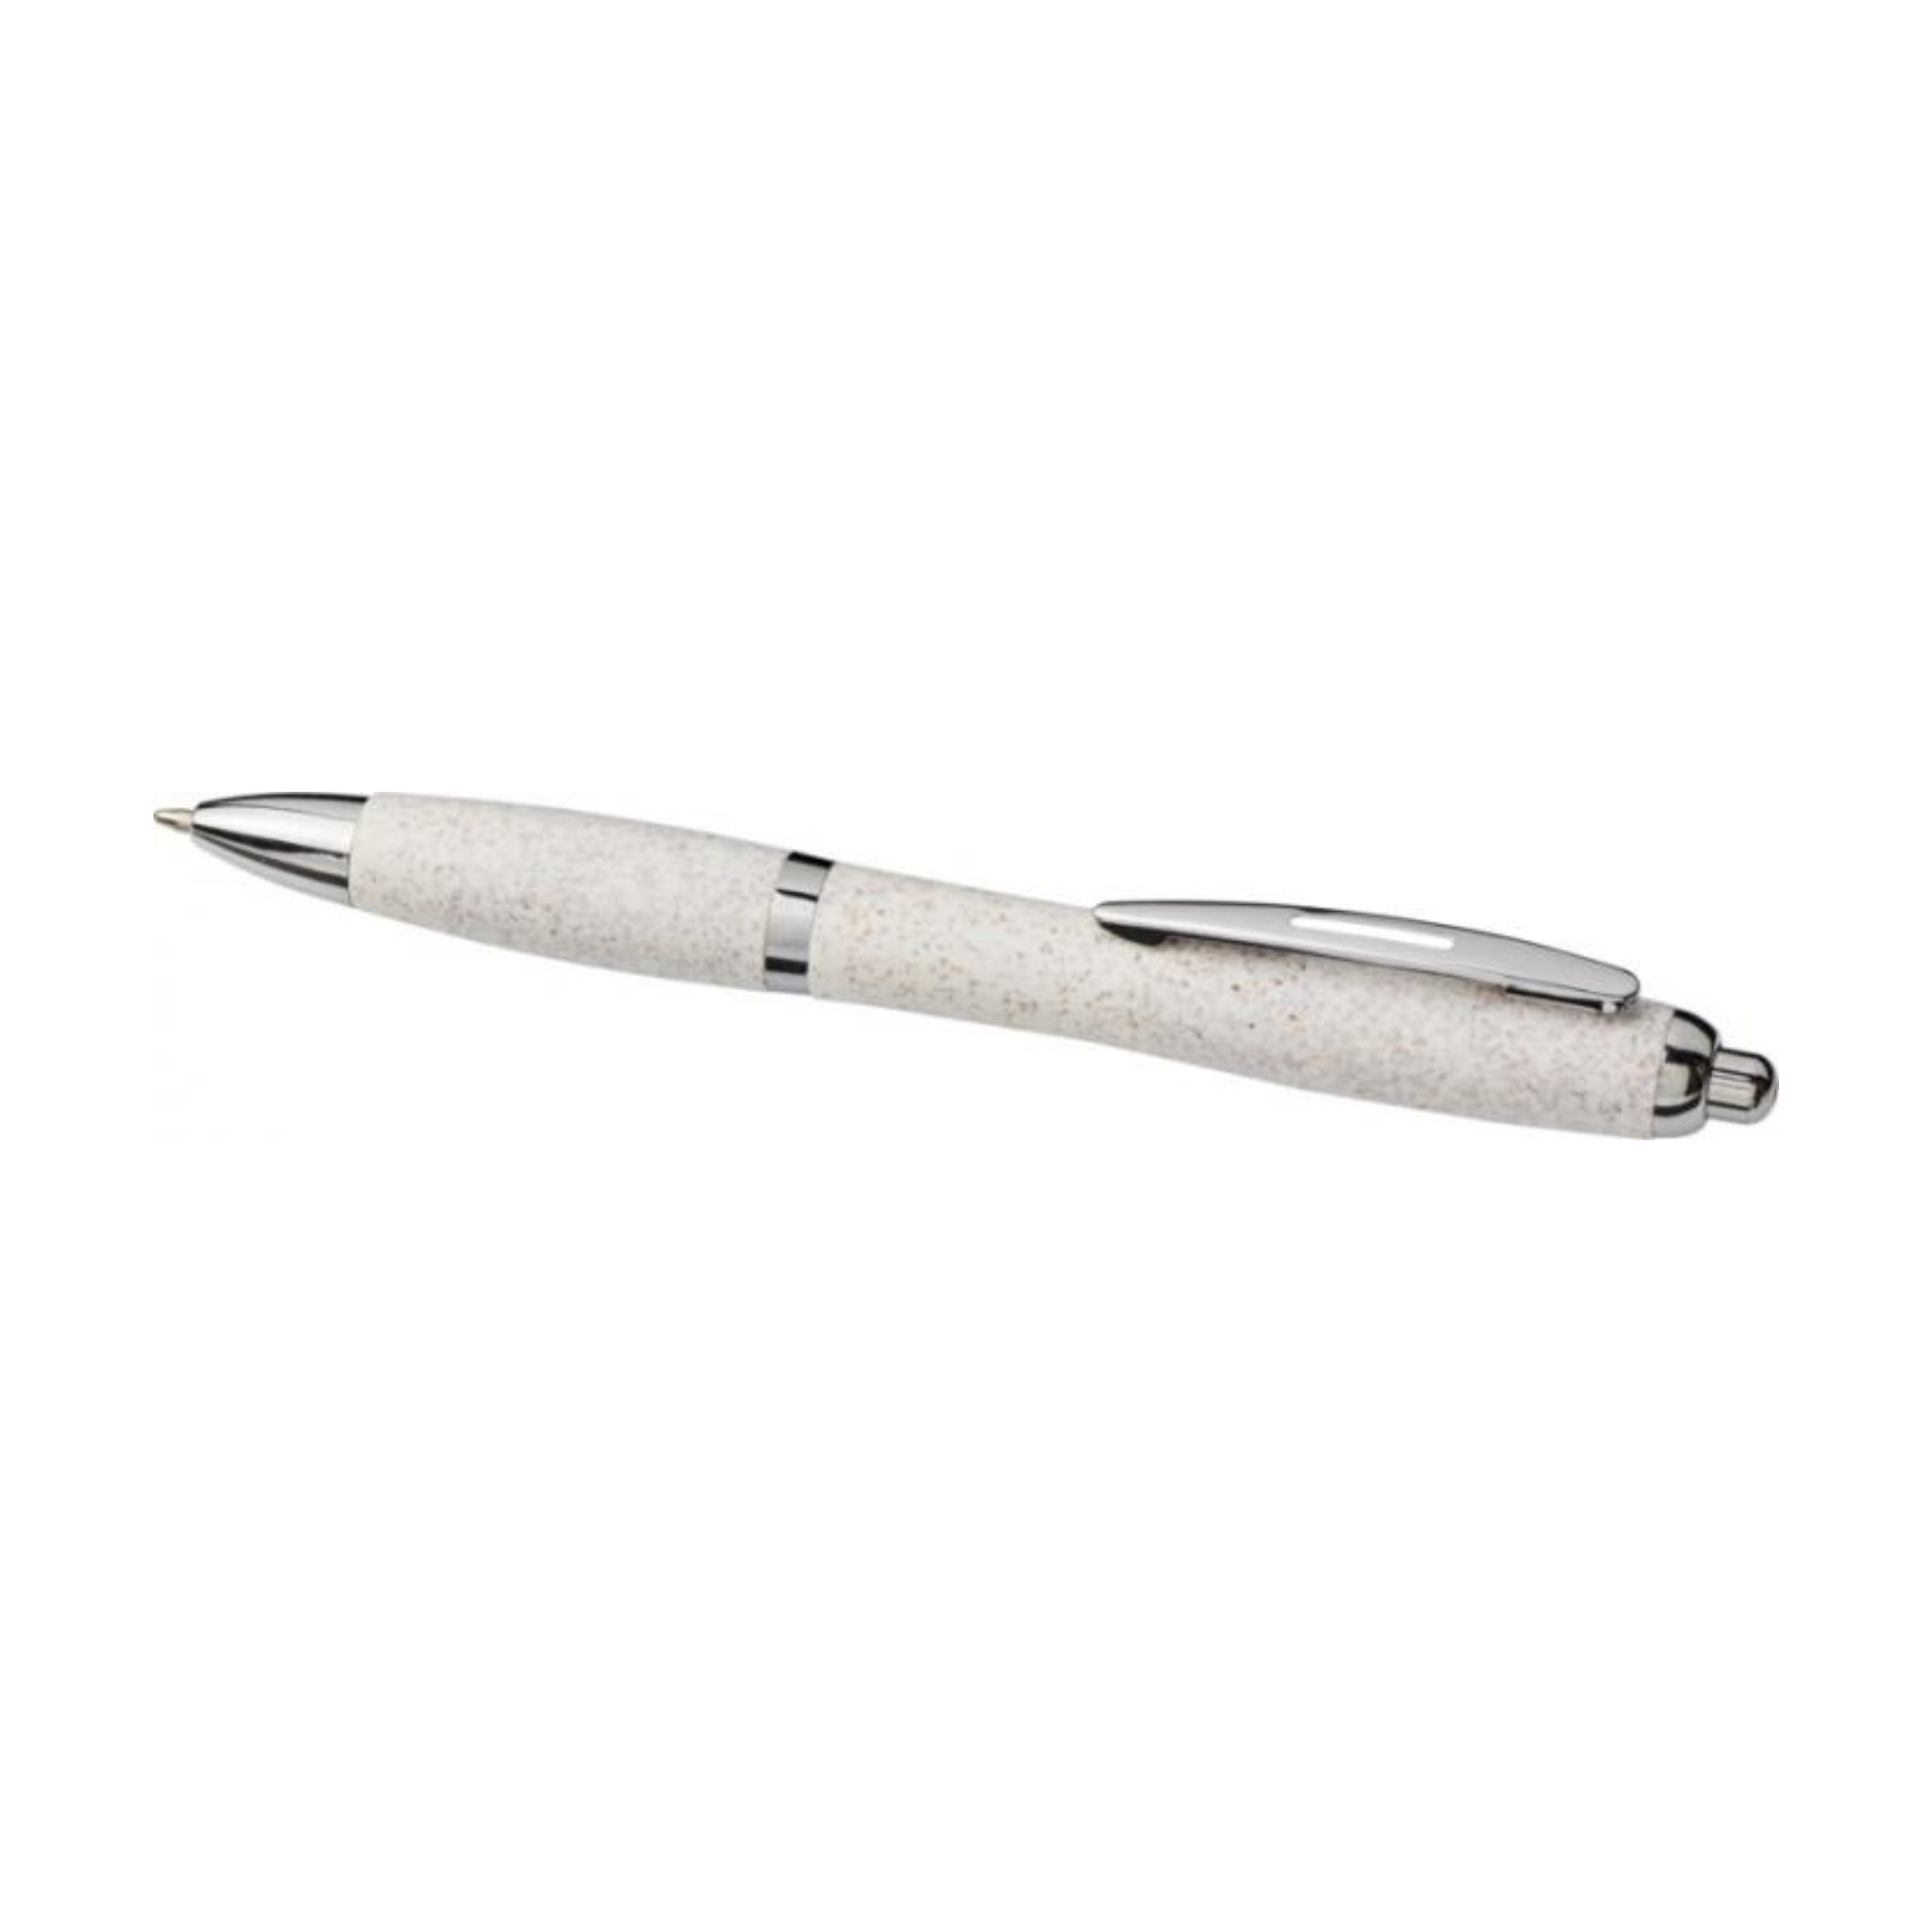 Wheat Straw & Chrome Ballpoint Pen - From 90p